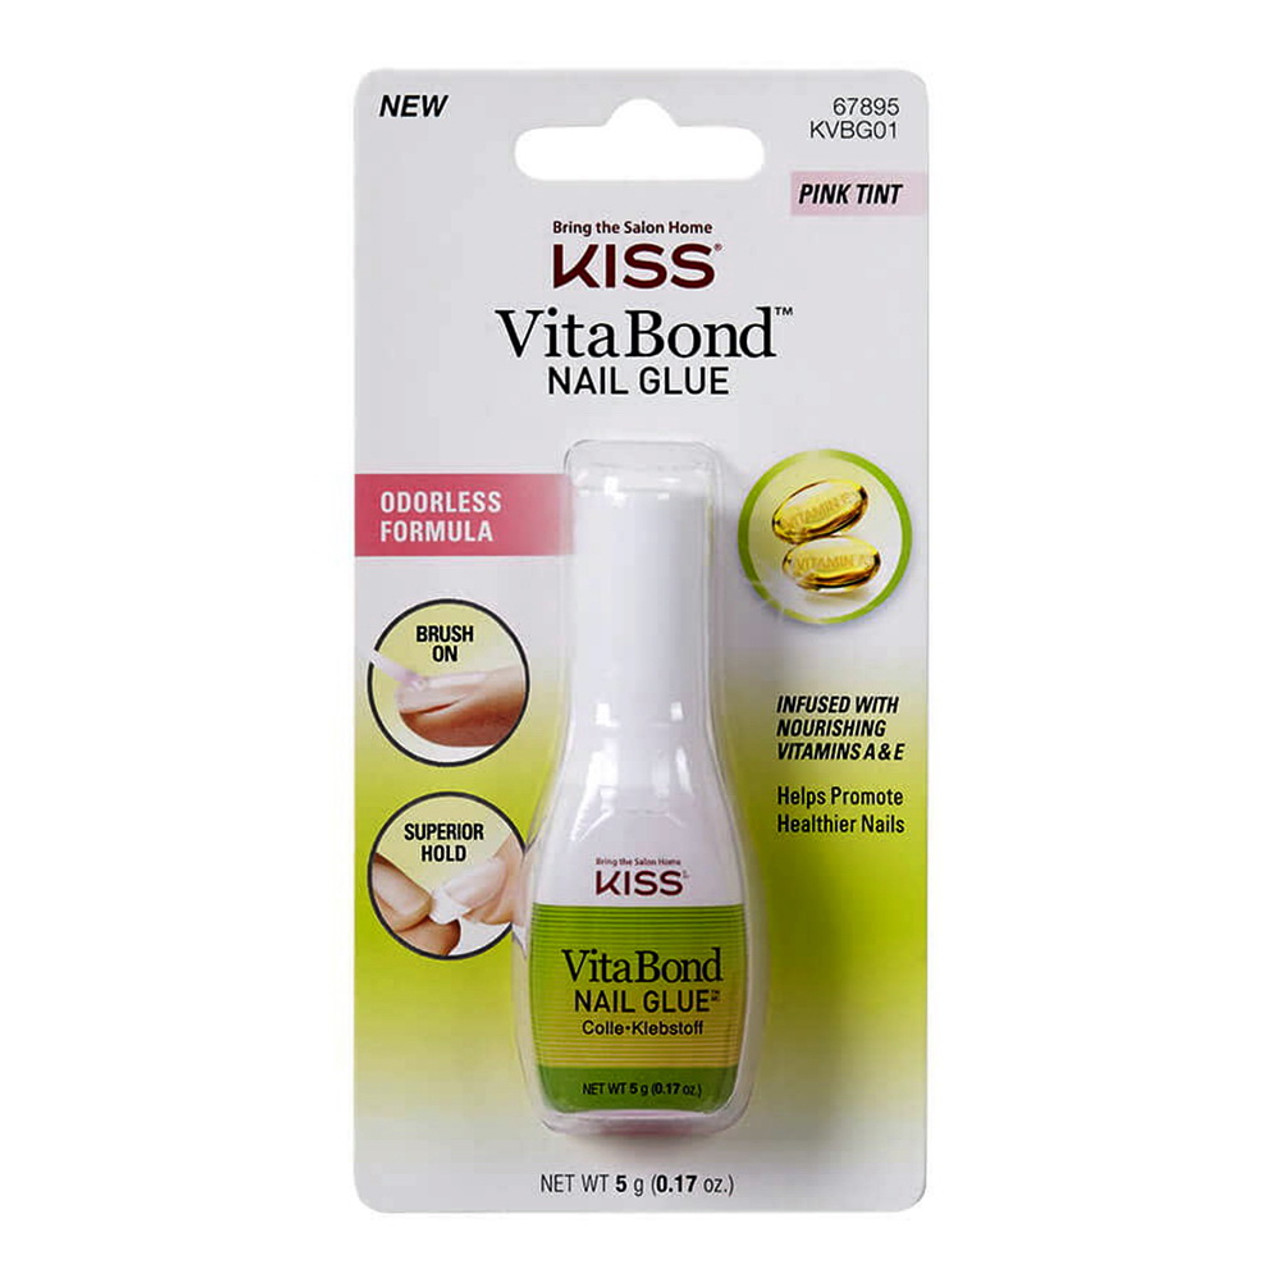 KISS VitaBond Nail Glue